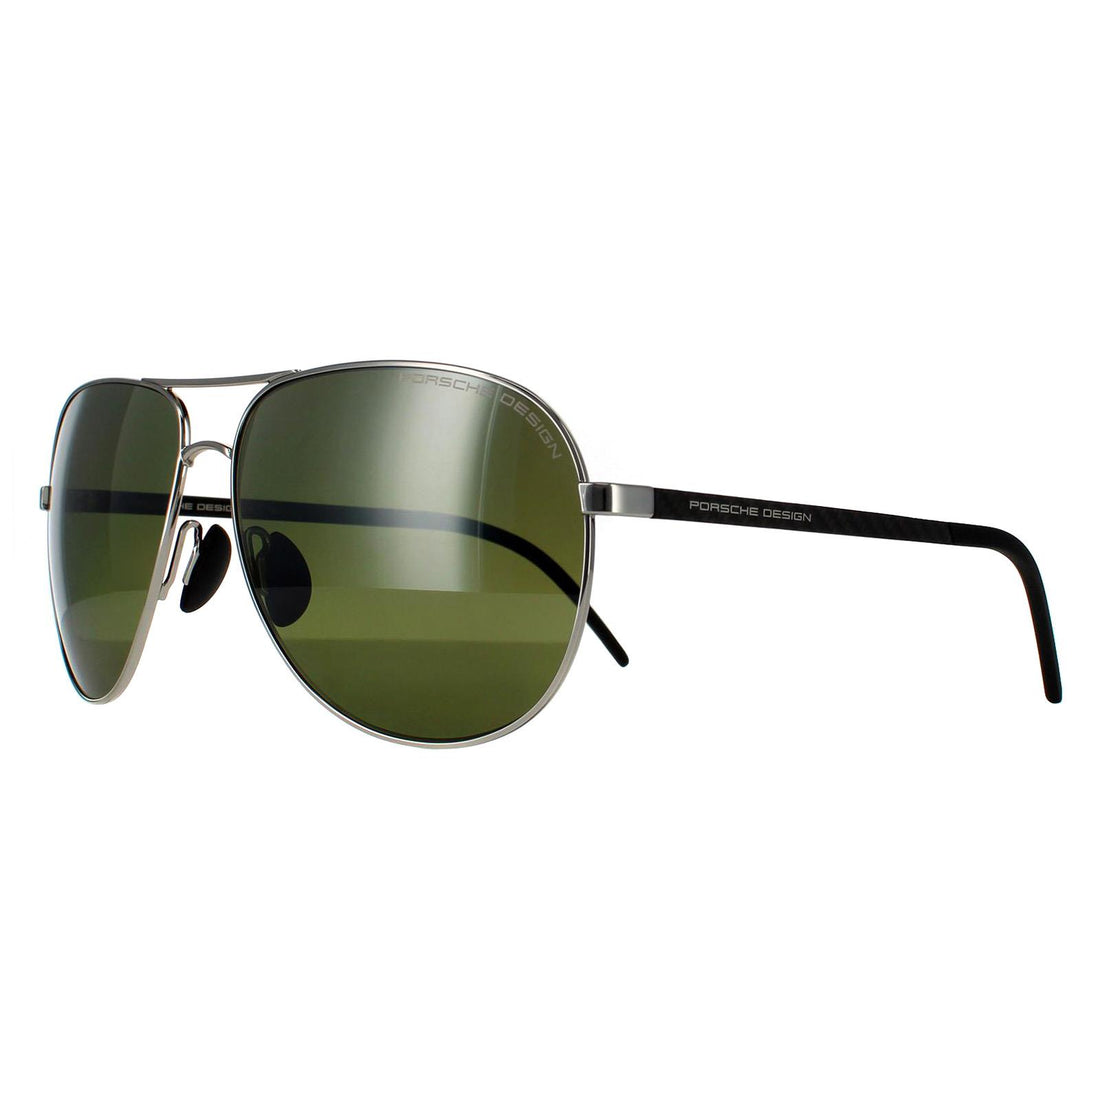 Porsche Design P8651 Sunglasses